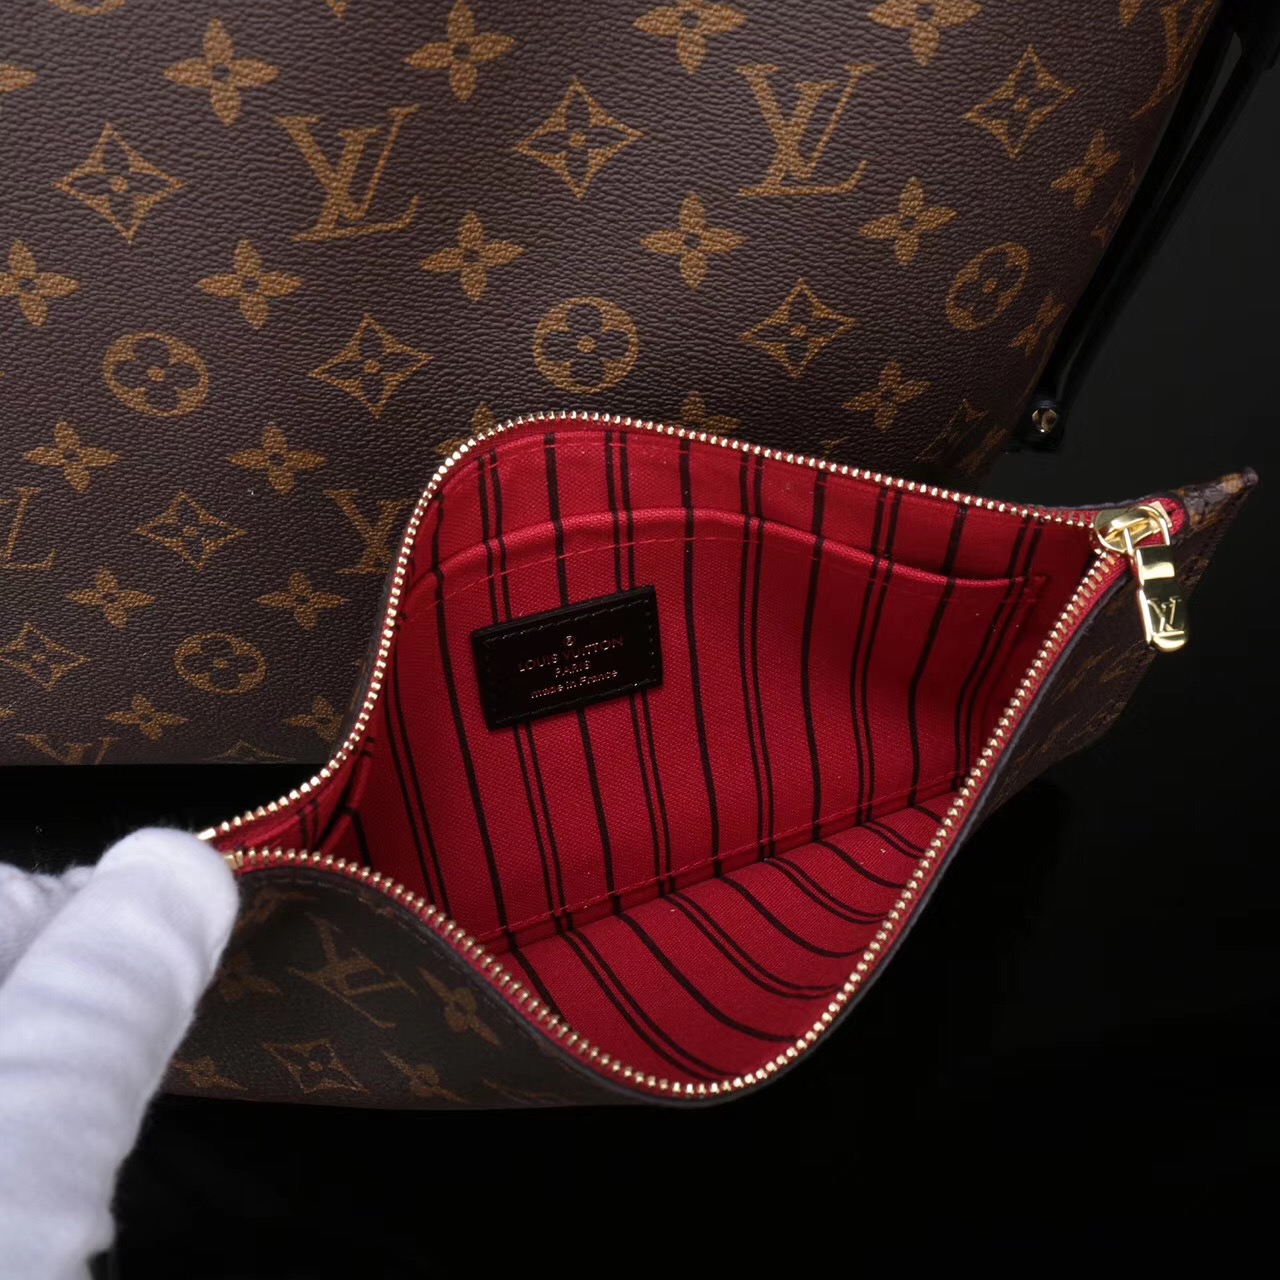 LV Louis Vuitton Neverfull Medium M48288 MM bags Monogram Handbags [LV1032] - $259.00 : Luxury Shop